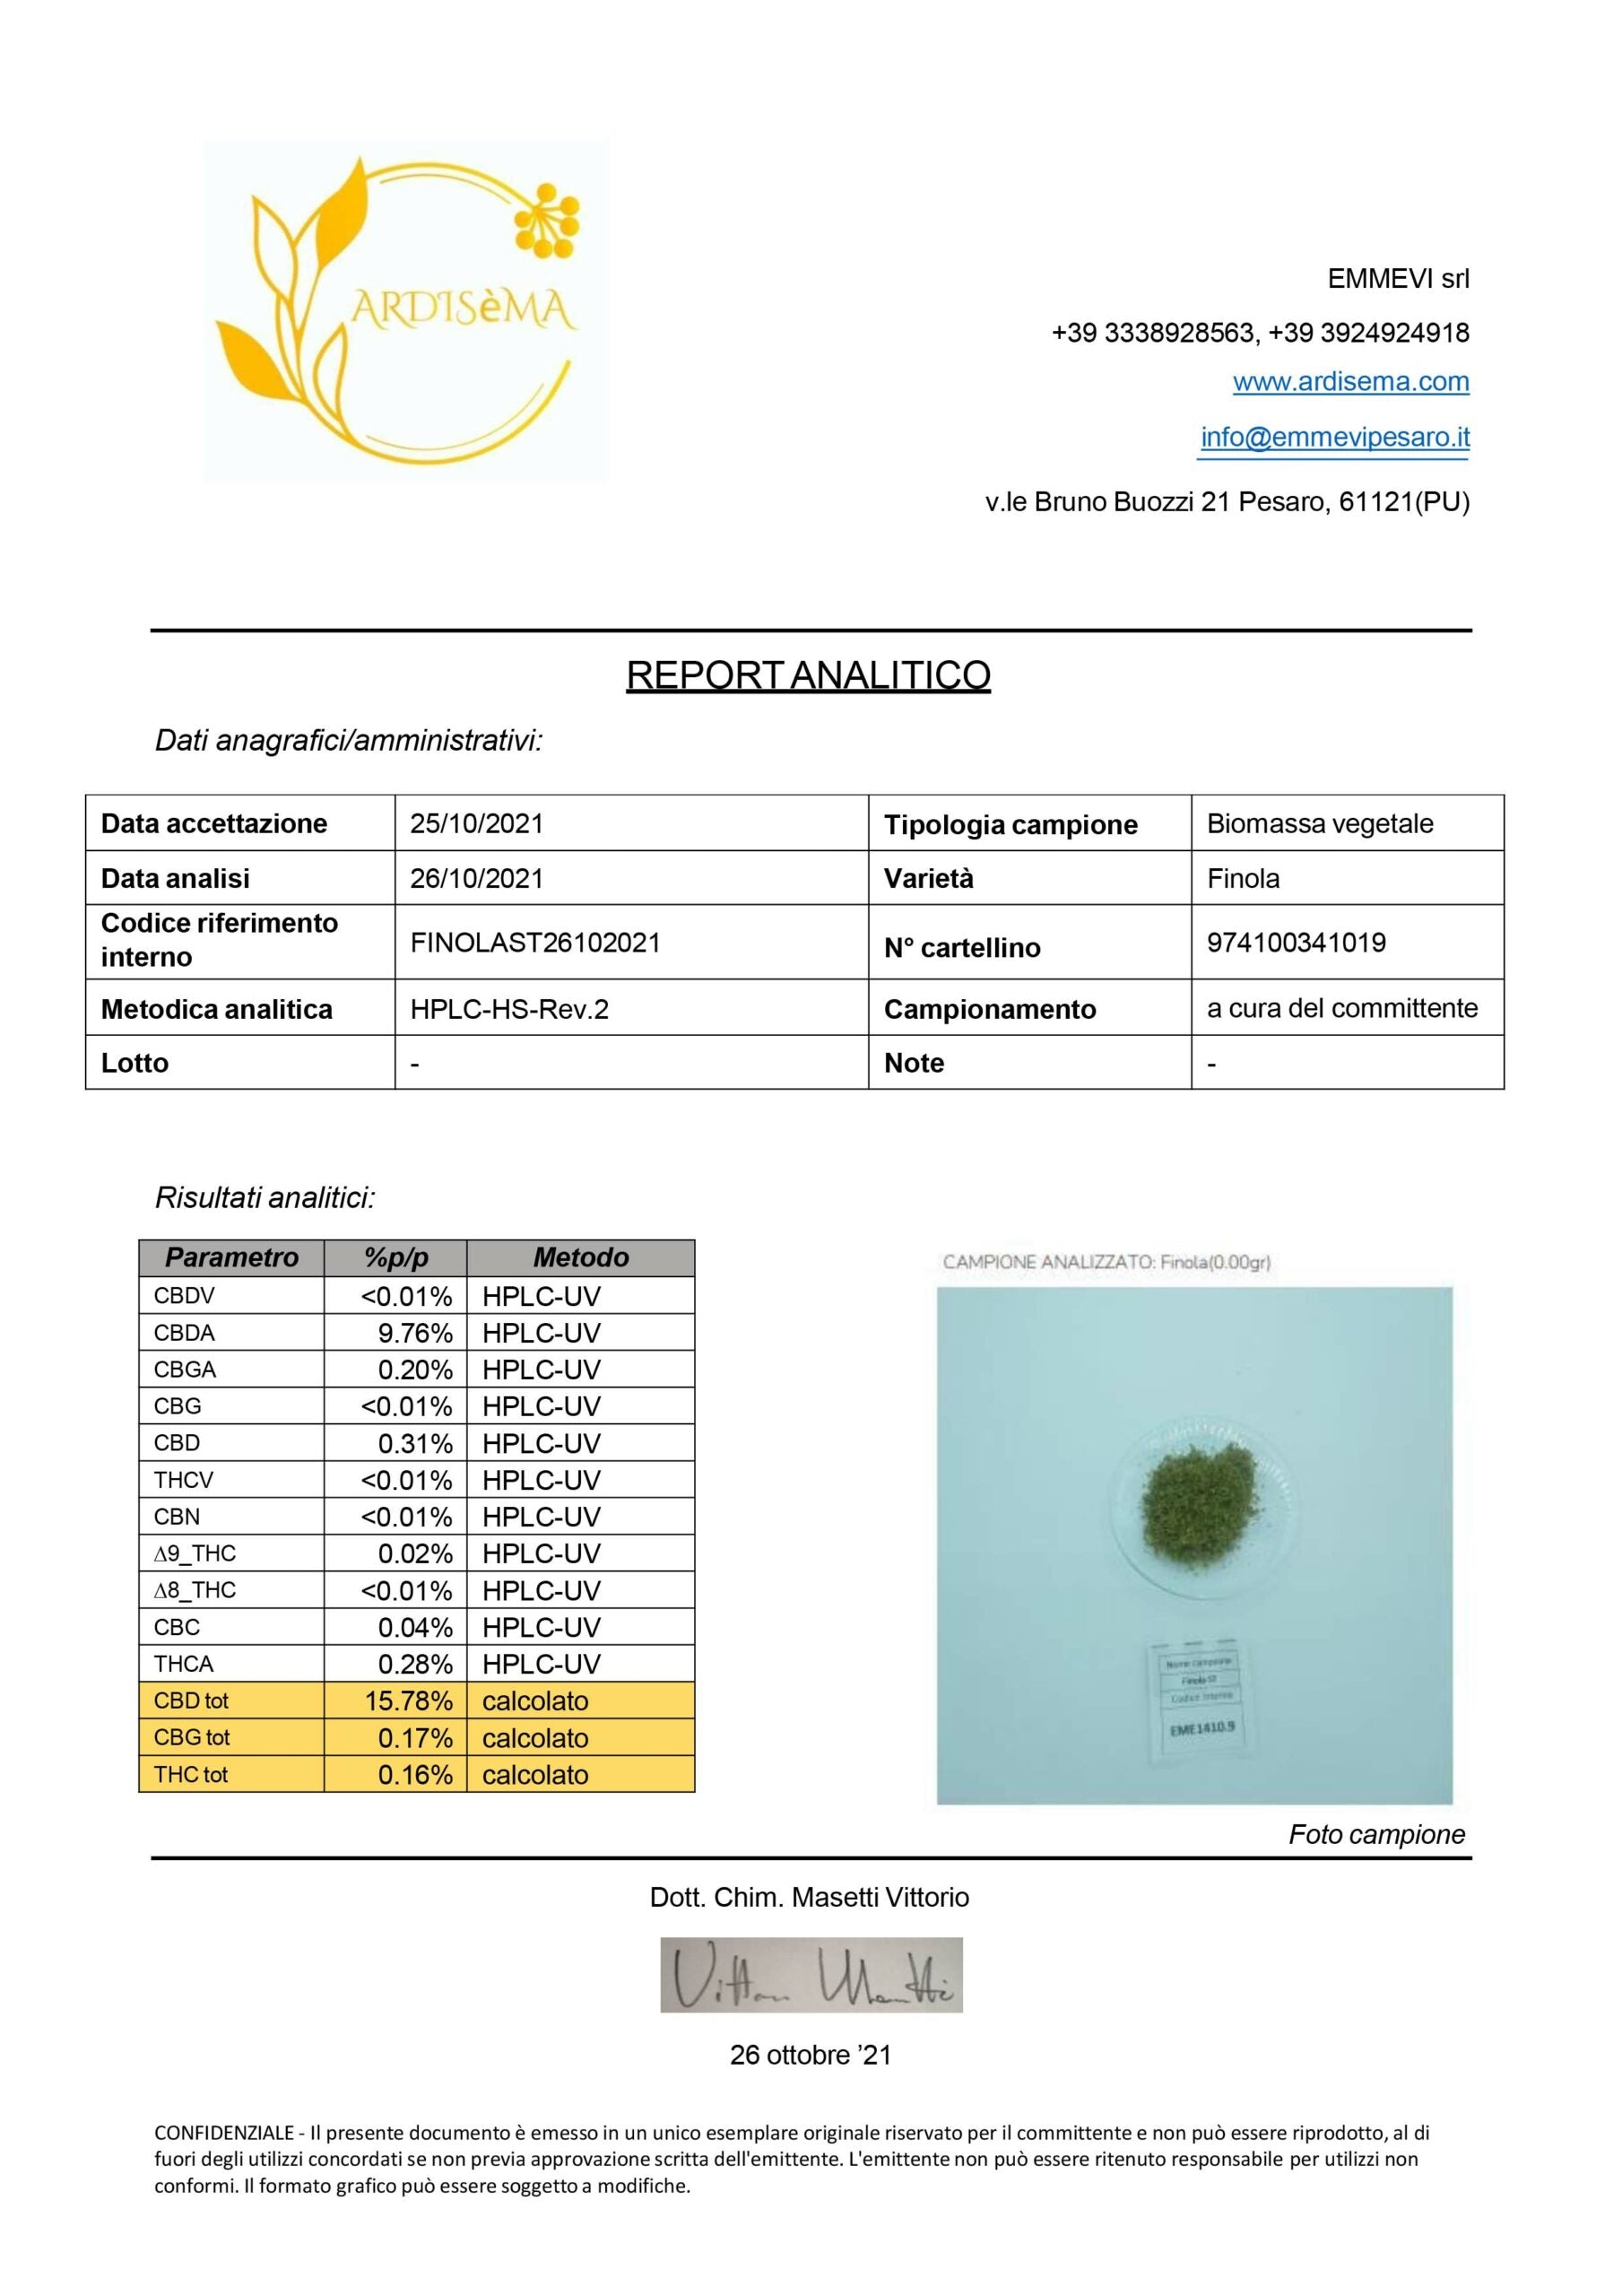 Cogollo de Flor Aromática de CBD al 15,78% · La Cordobesa Limonera